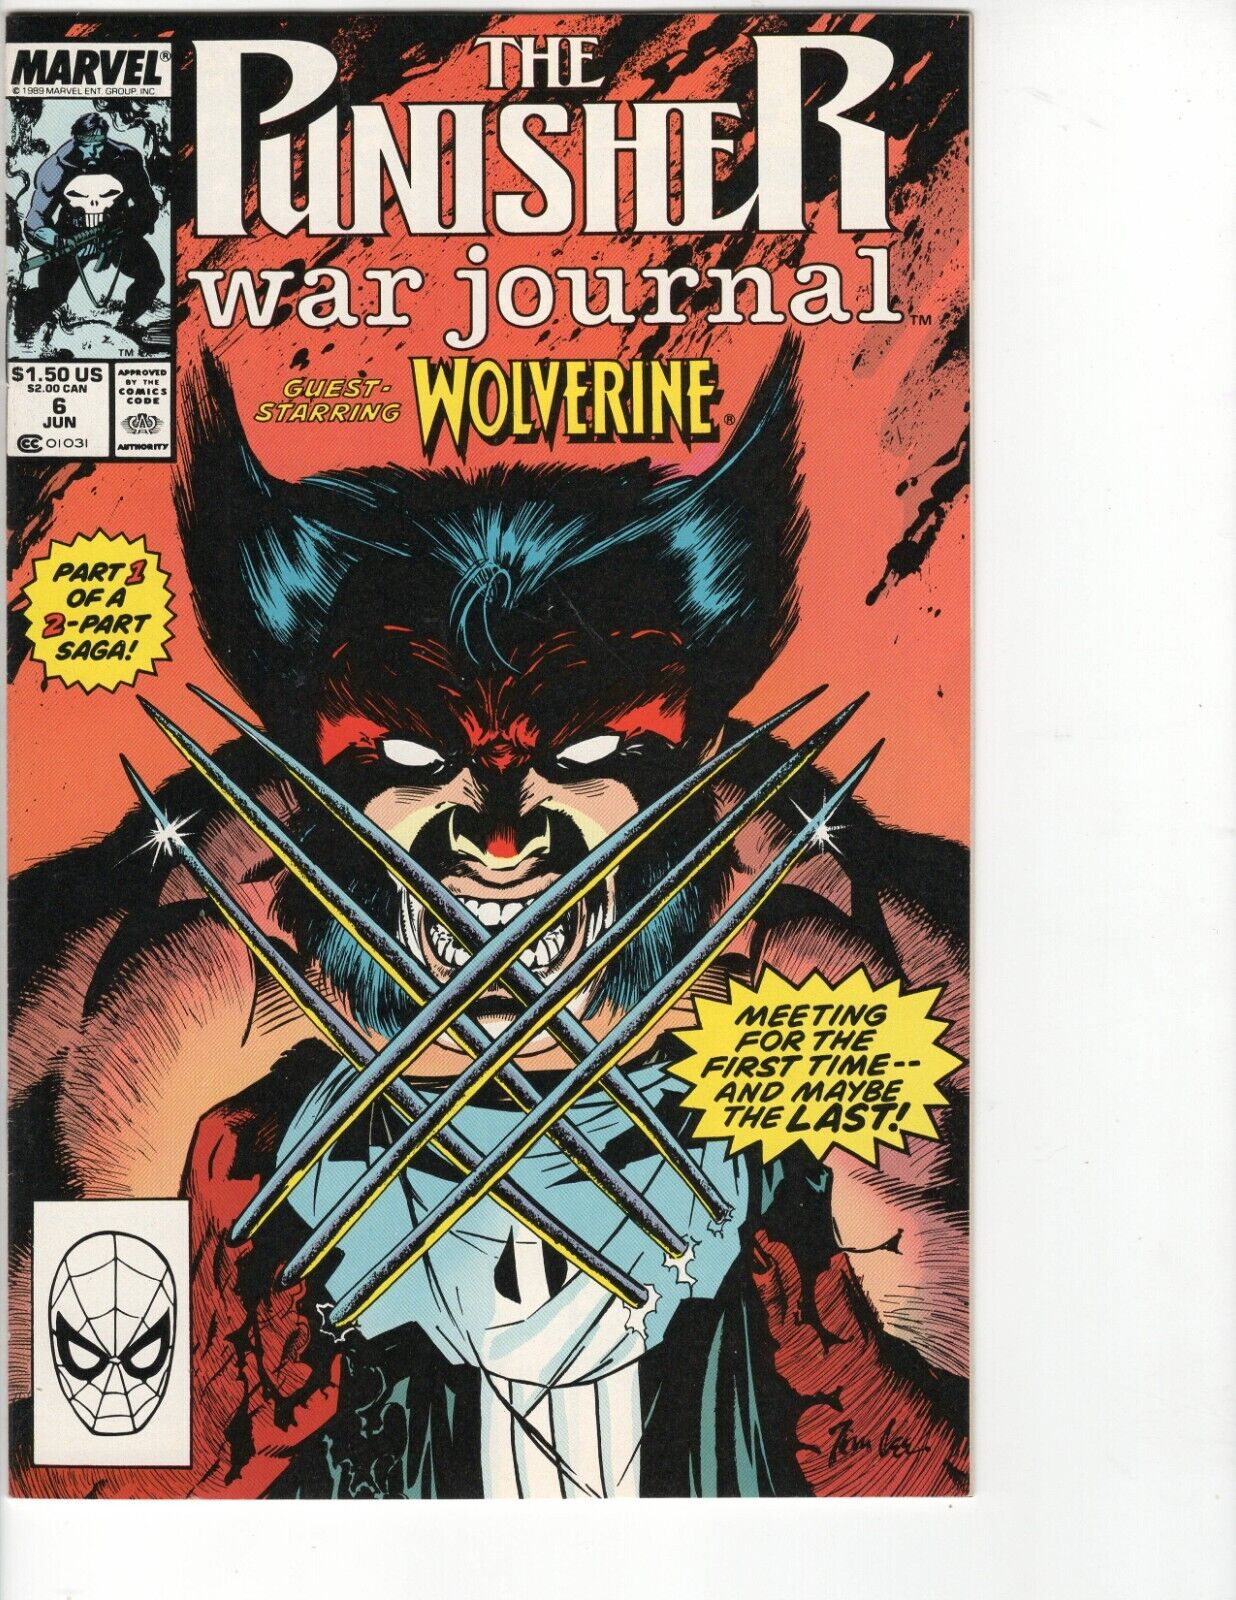 PUNISHER WAR JOURNAL #6  - Wolverine 1989 - High Grade 9.4 NM - Blazing Color